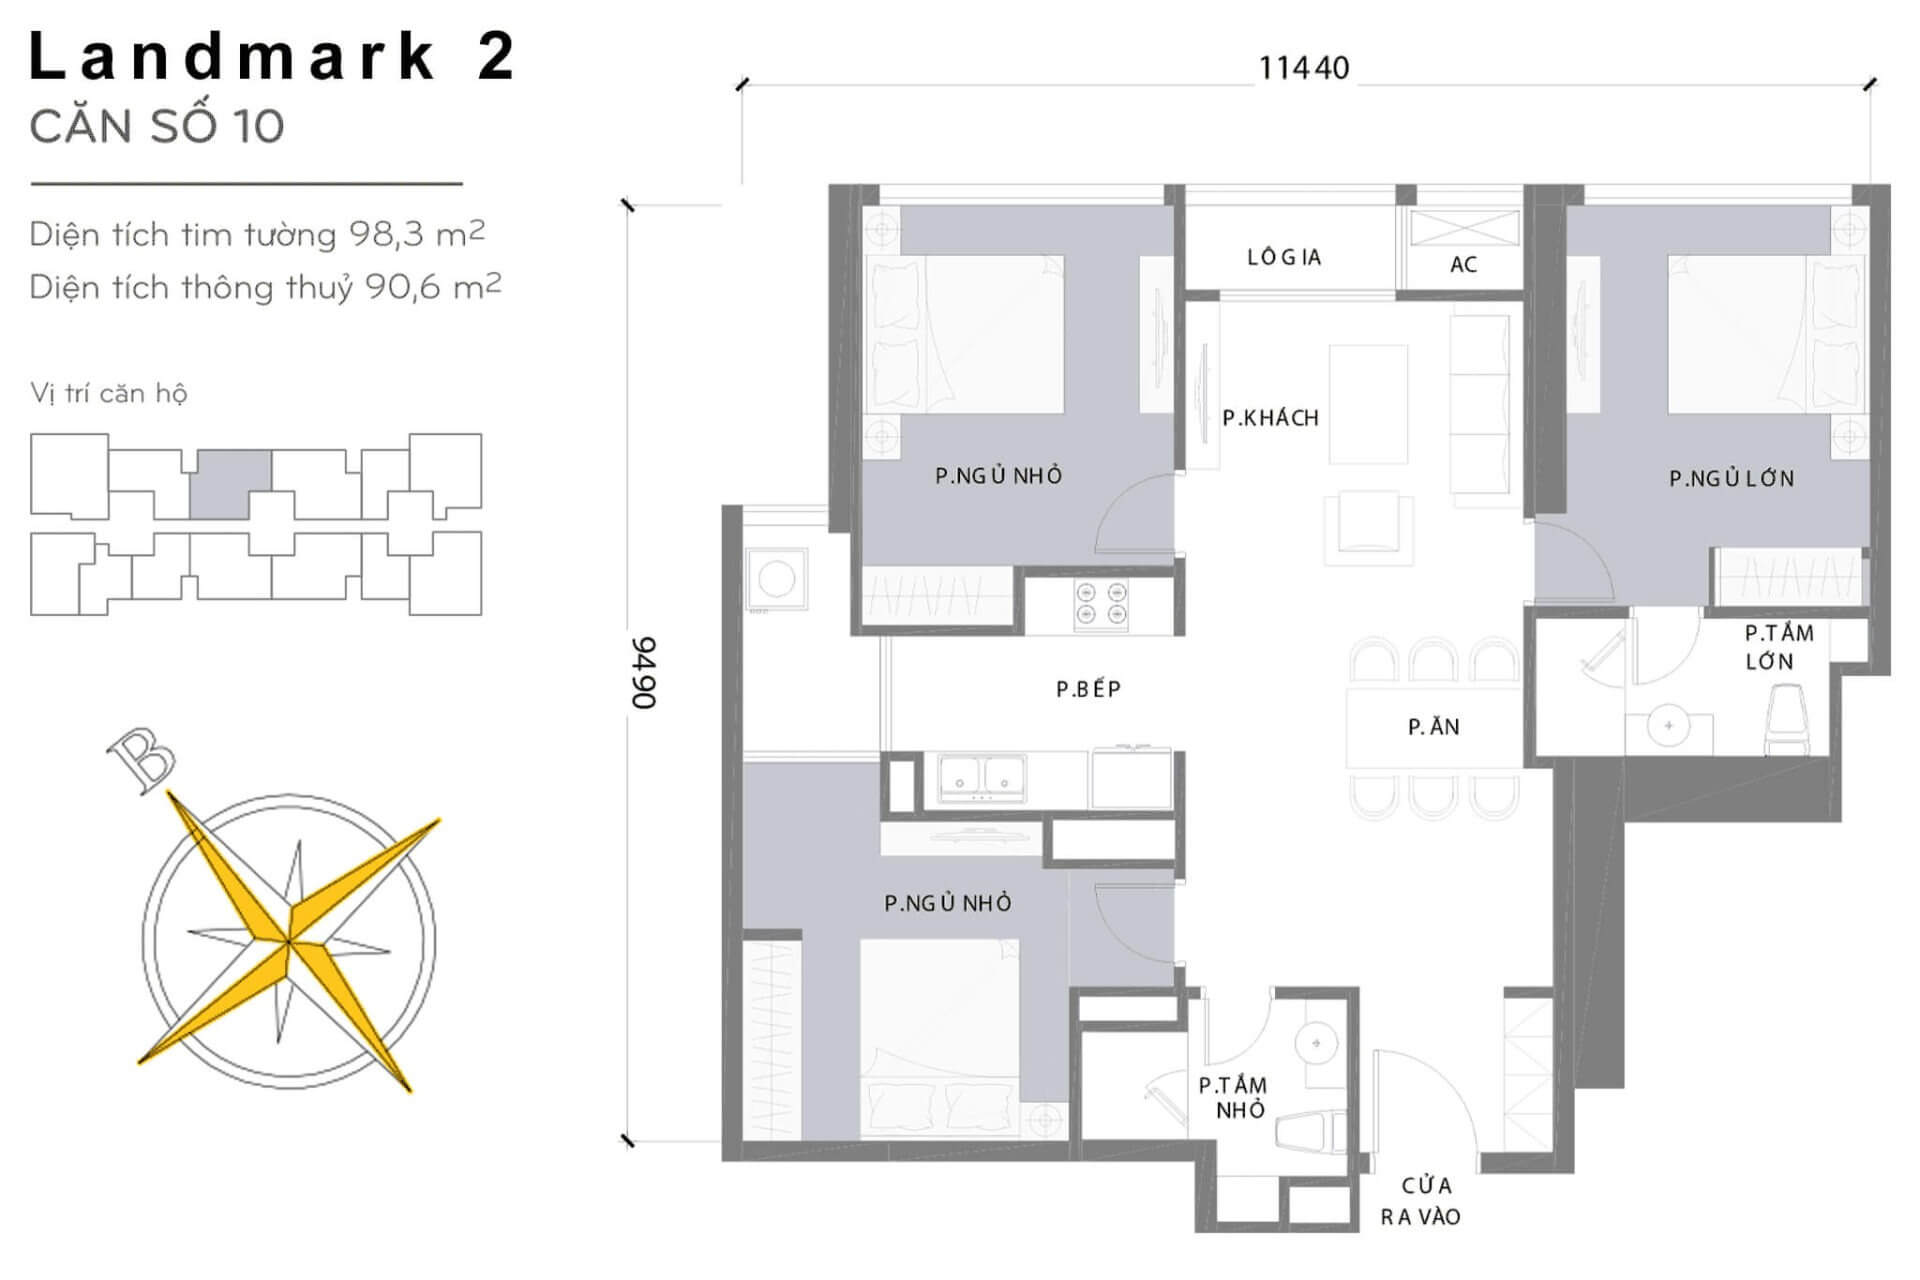 layout căn hộ số 10 Landmark 2 L2-10